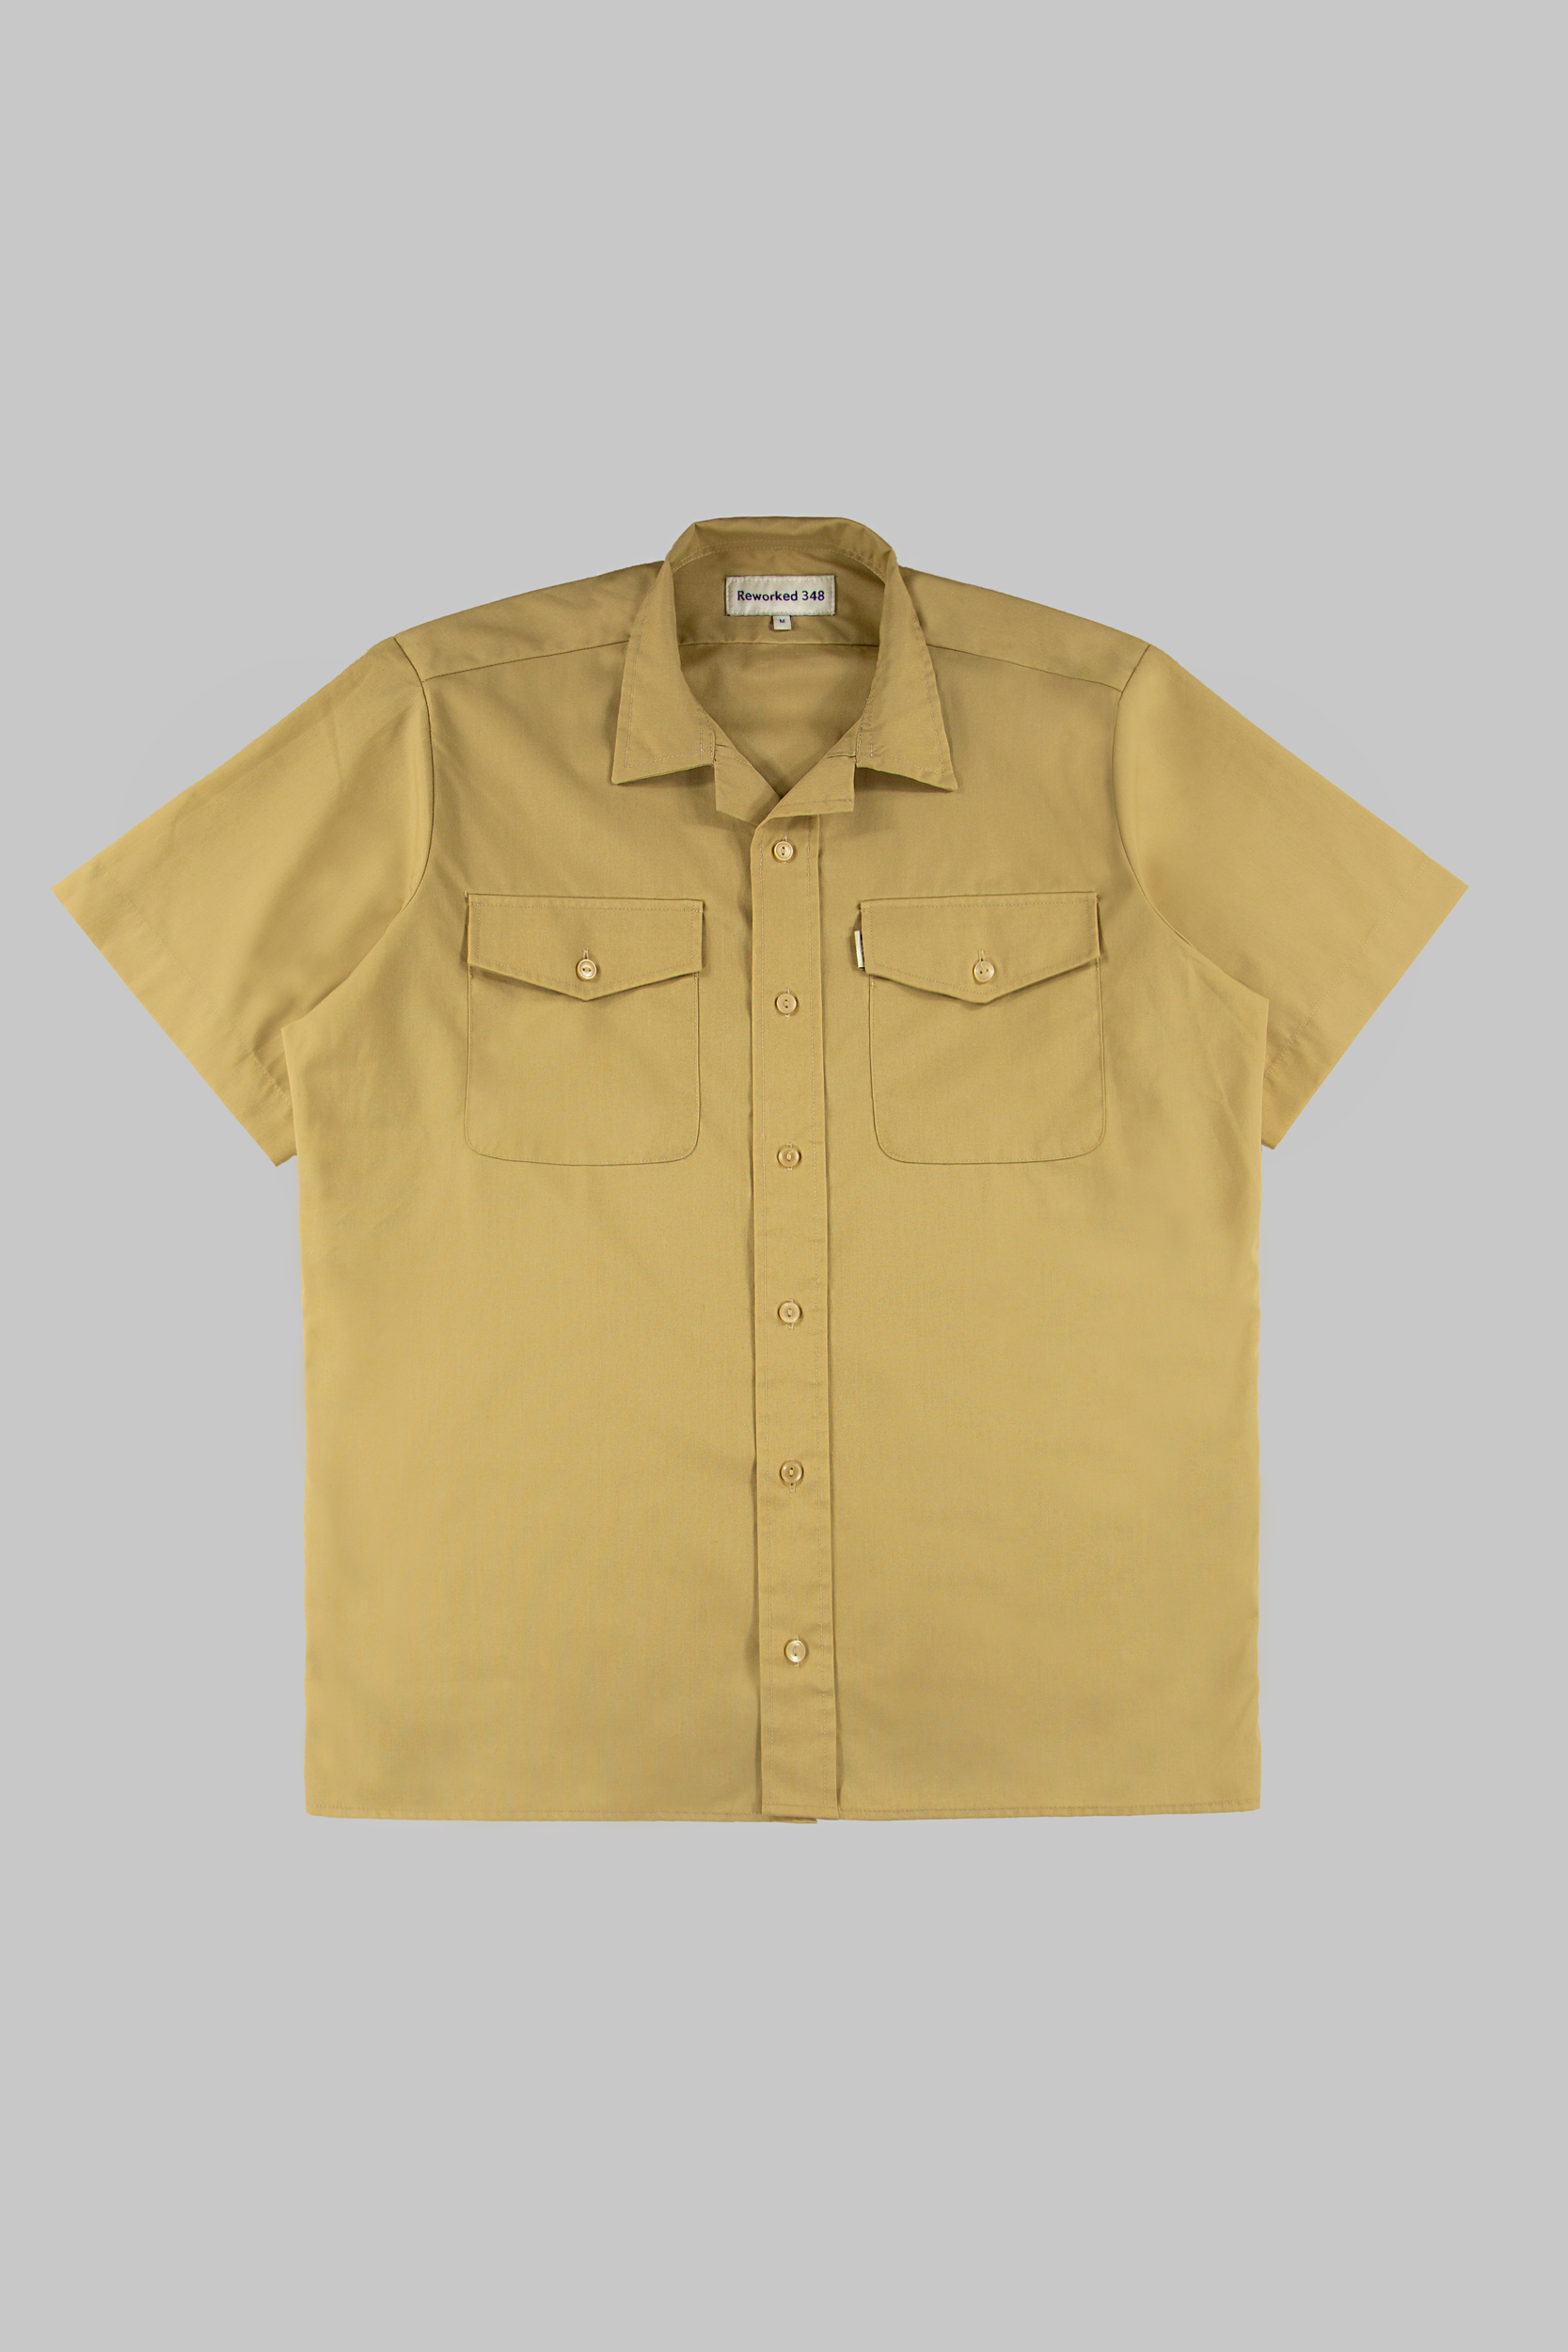 Tripps Shirt Muted Yellow